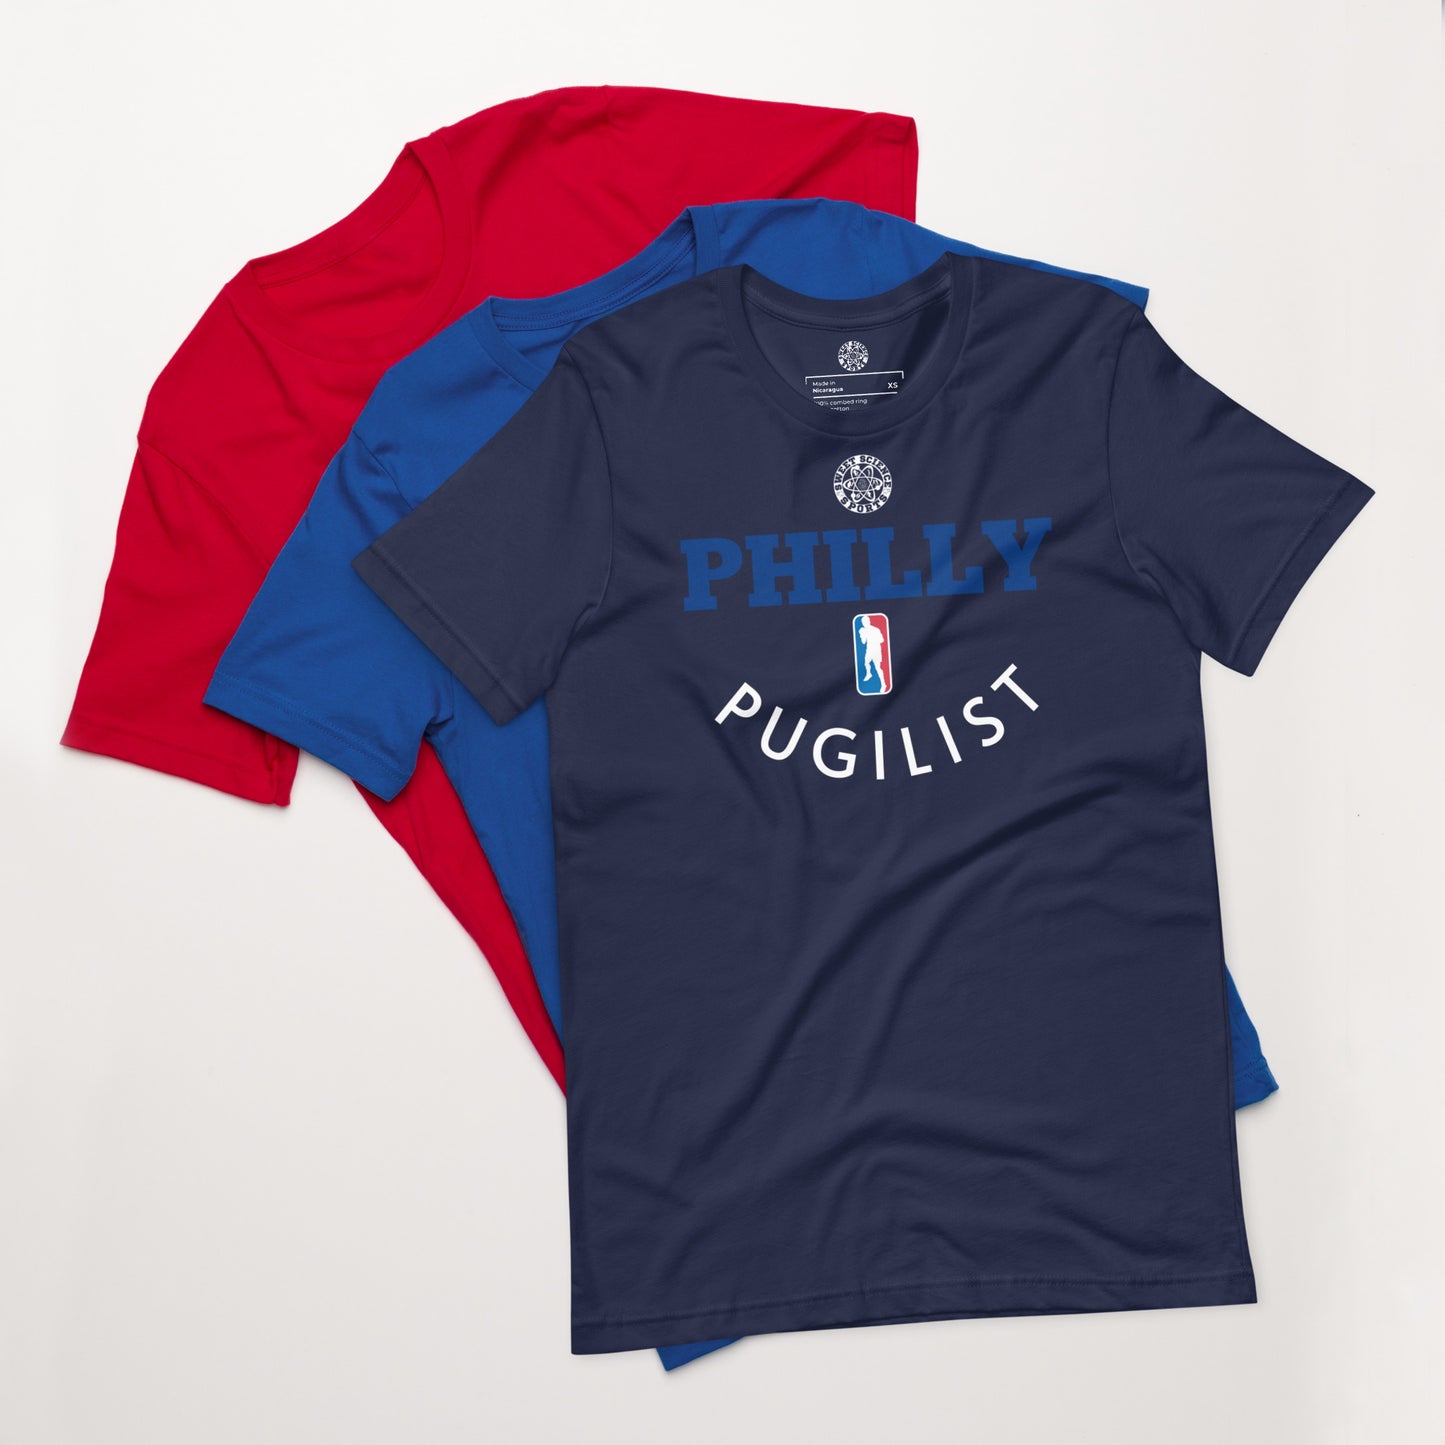 Philly Pugilist Unisex t-shirt